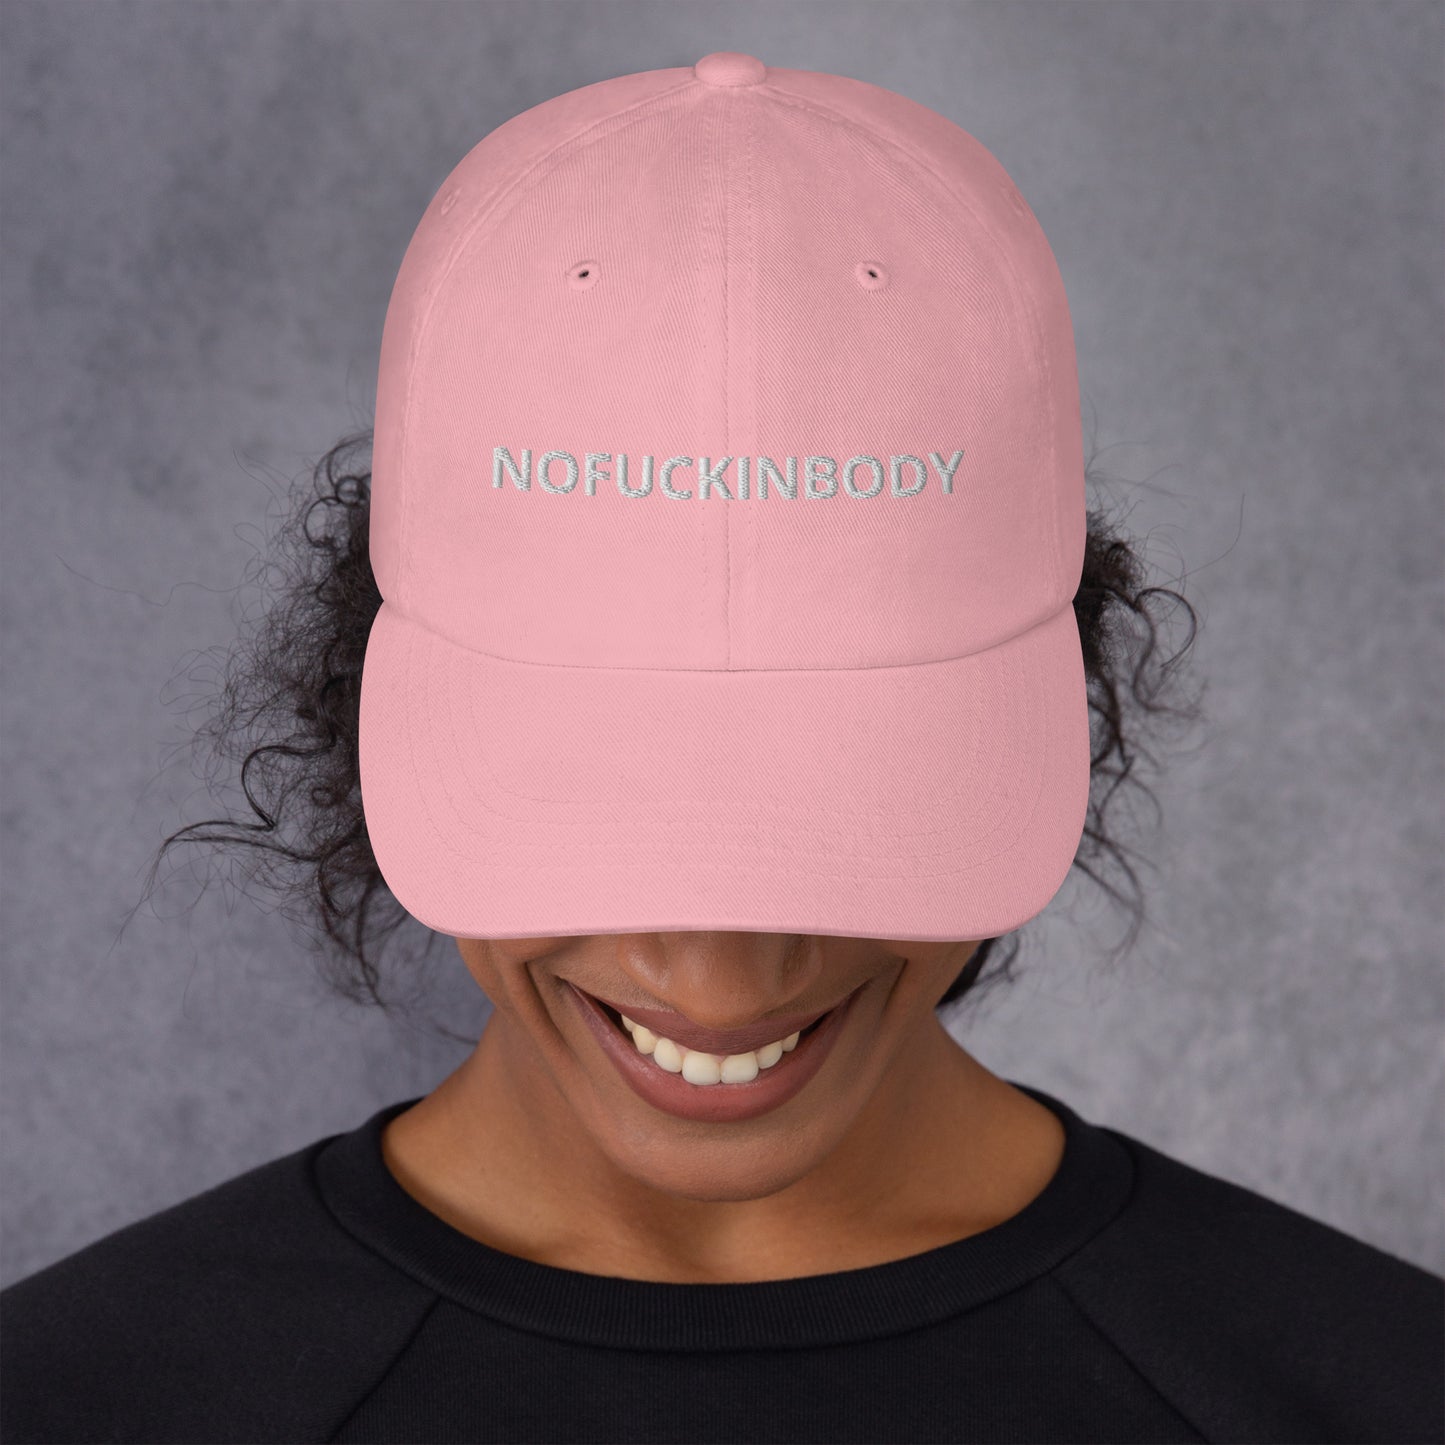 NOFUCKINBODY hat